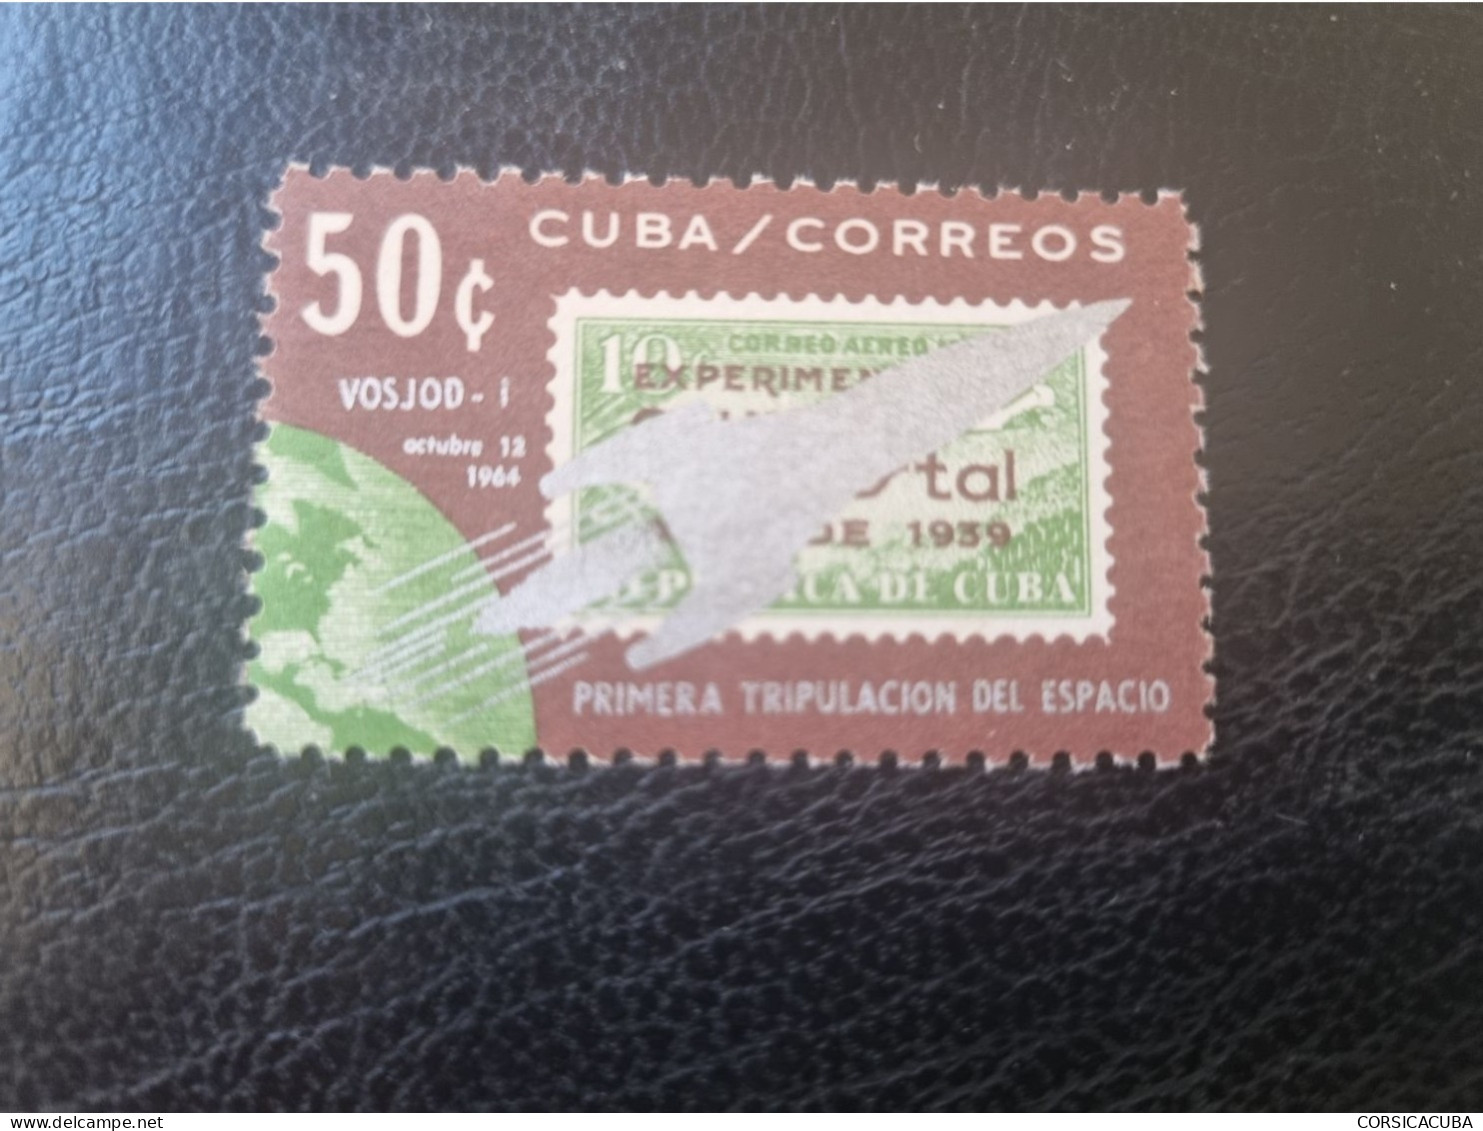 CUBA  NEUF  1964   VUELO  ESPACIAL  VOSJOD  I  //  PARFAIT  ETAT  // Sans Gomme - Neufs